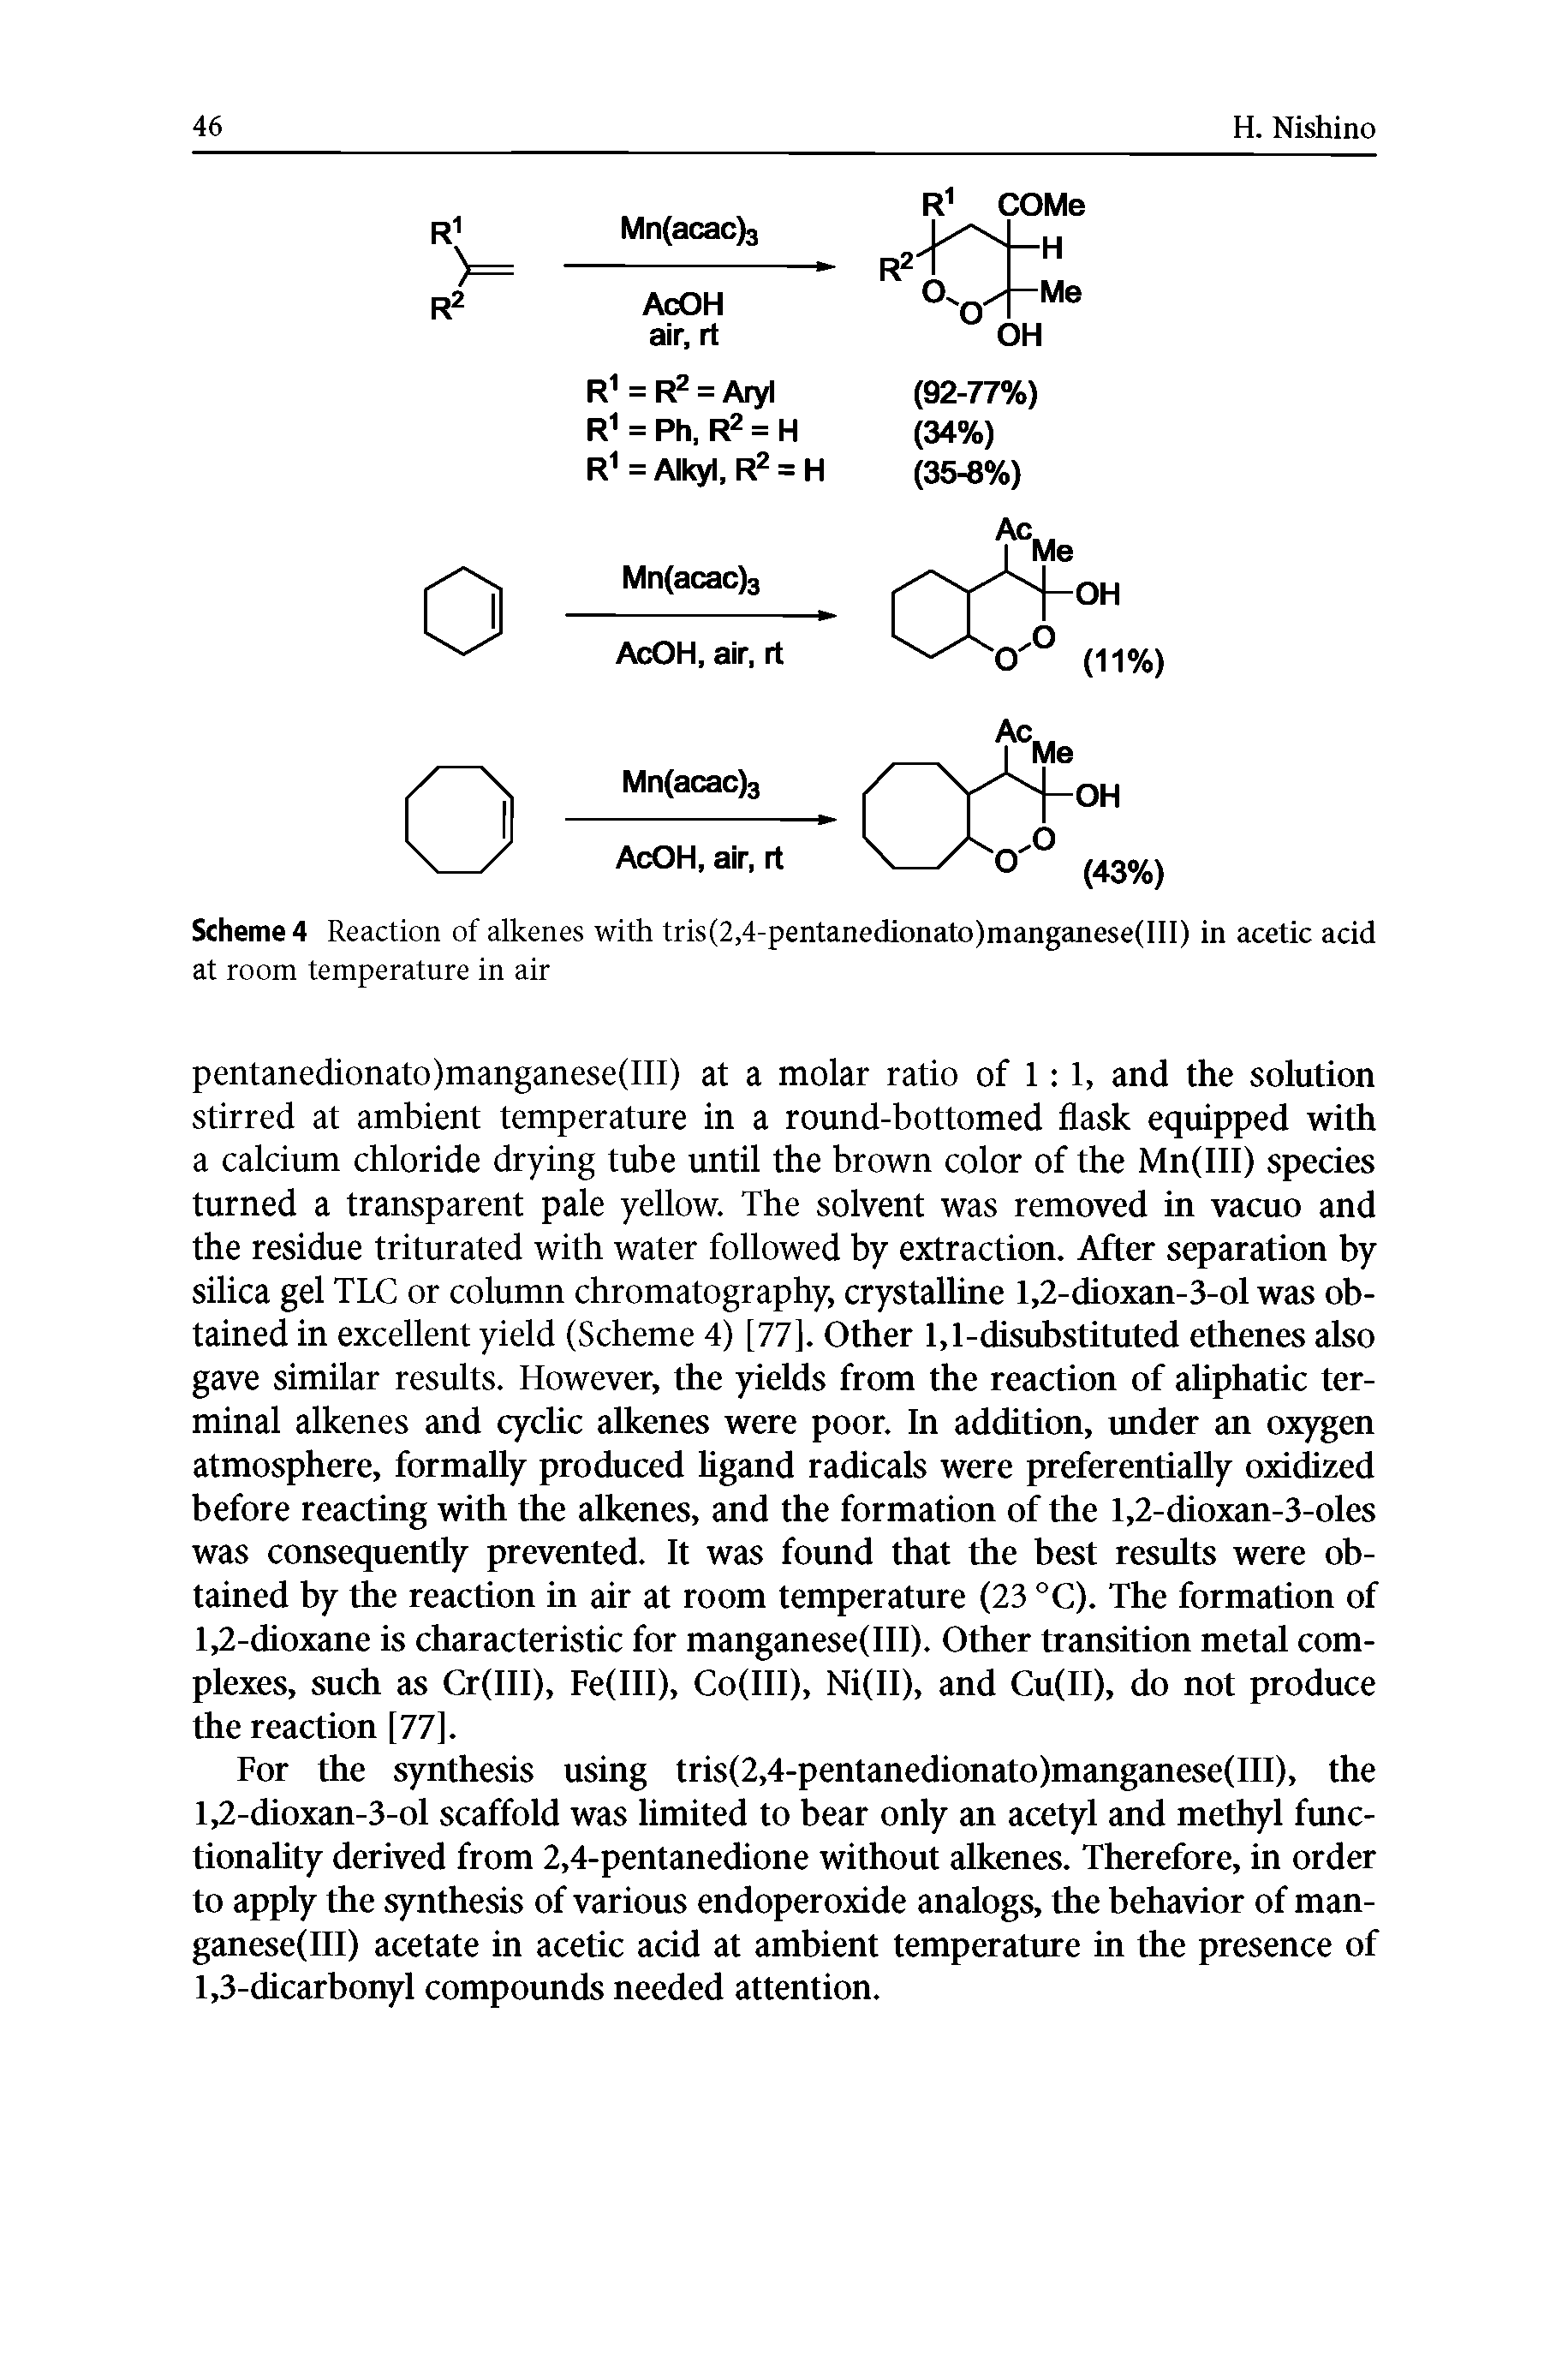 Scheme 4 Reaction of alkenes with tris(2,4-pentanedionato)manganese(III) in acetic acid at room temperature in air...